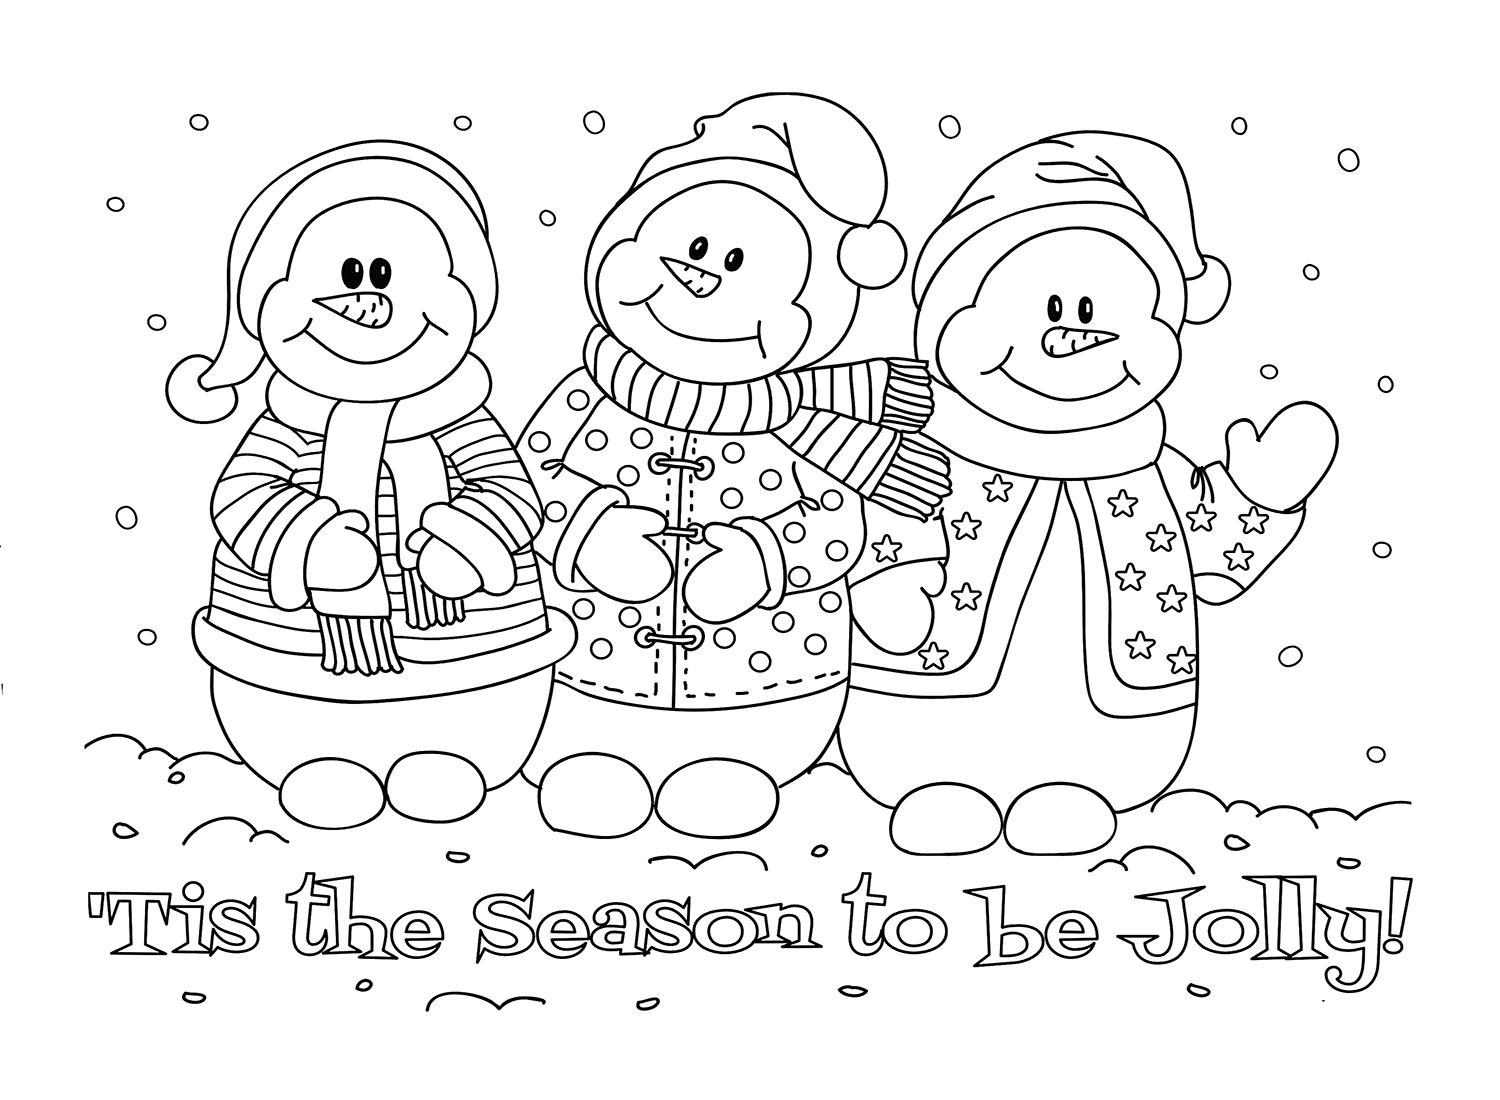 Drie sneeuwmannen kleurplaten van Sneeuwman